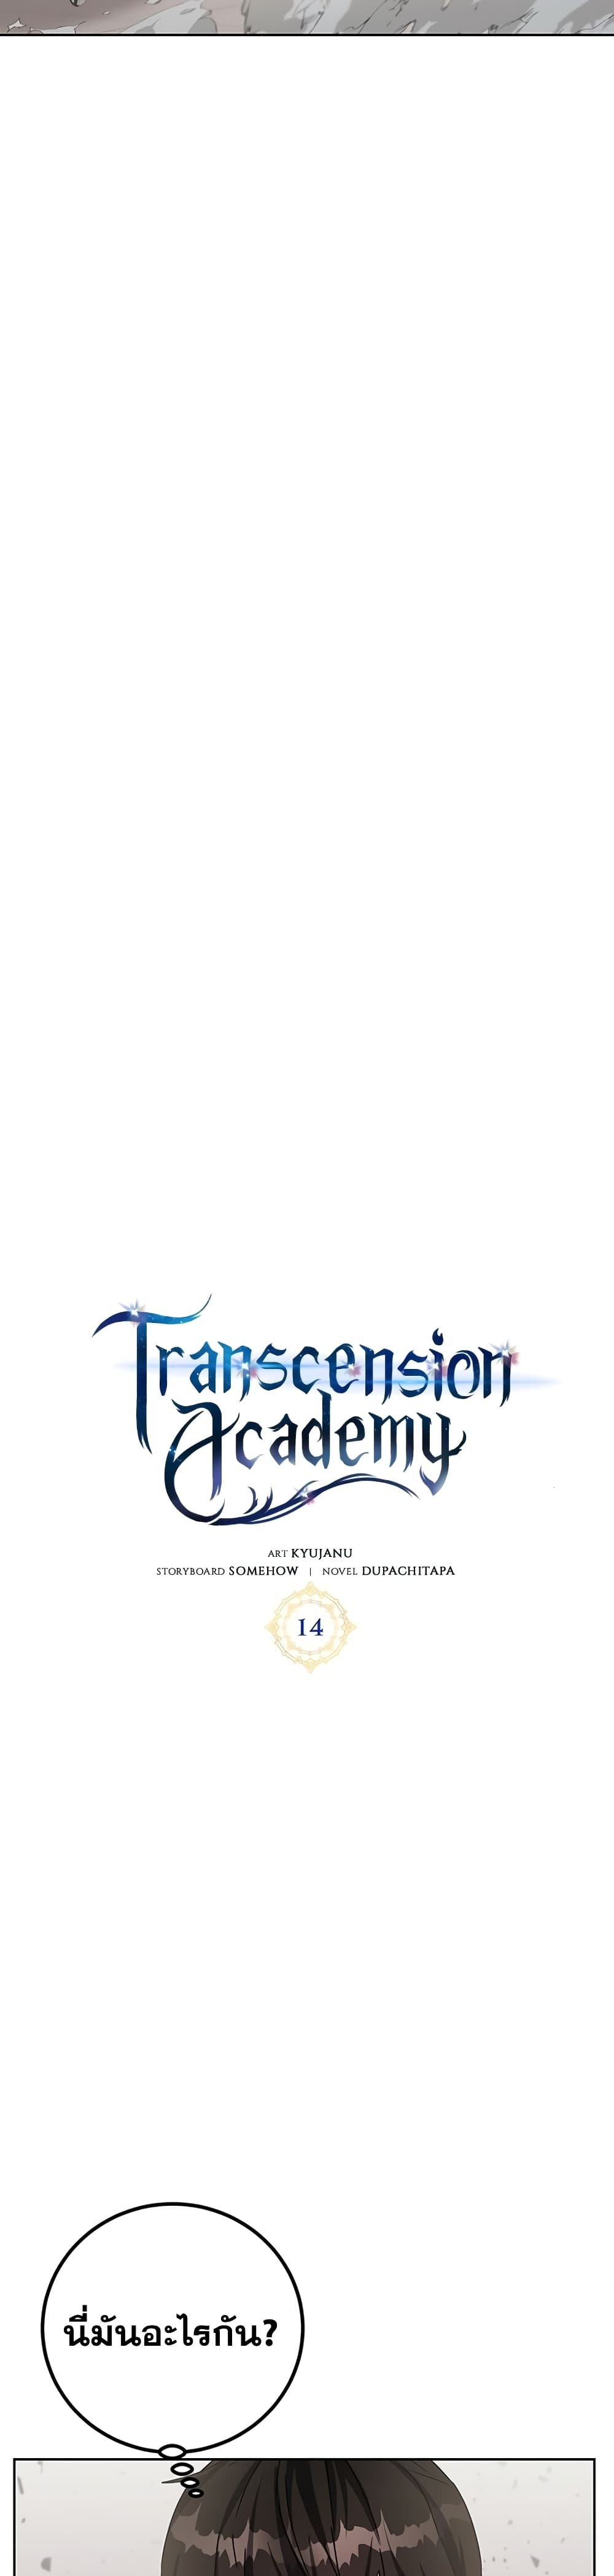 Transcension Academy 14-14